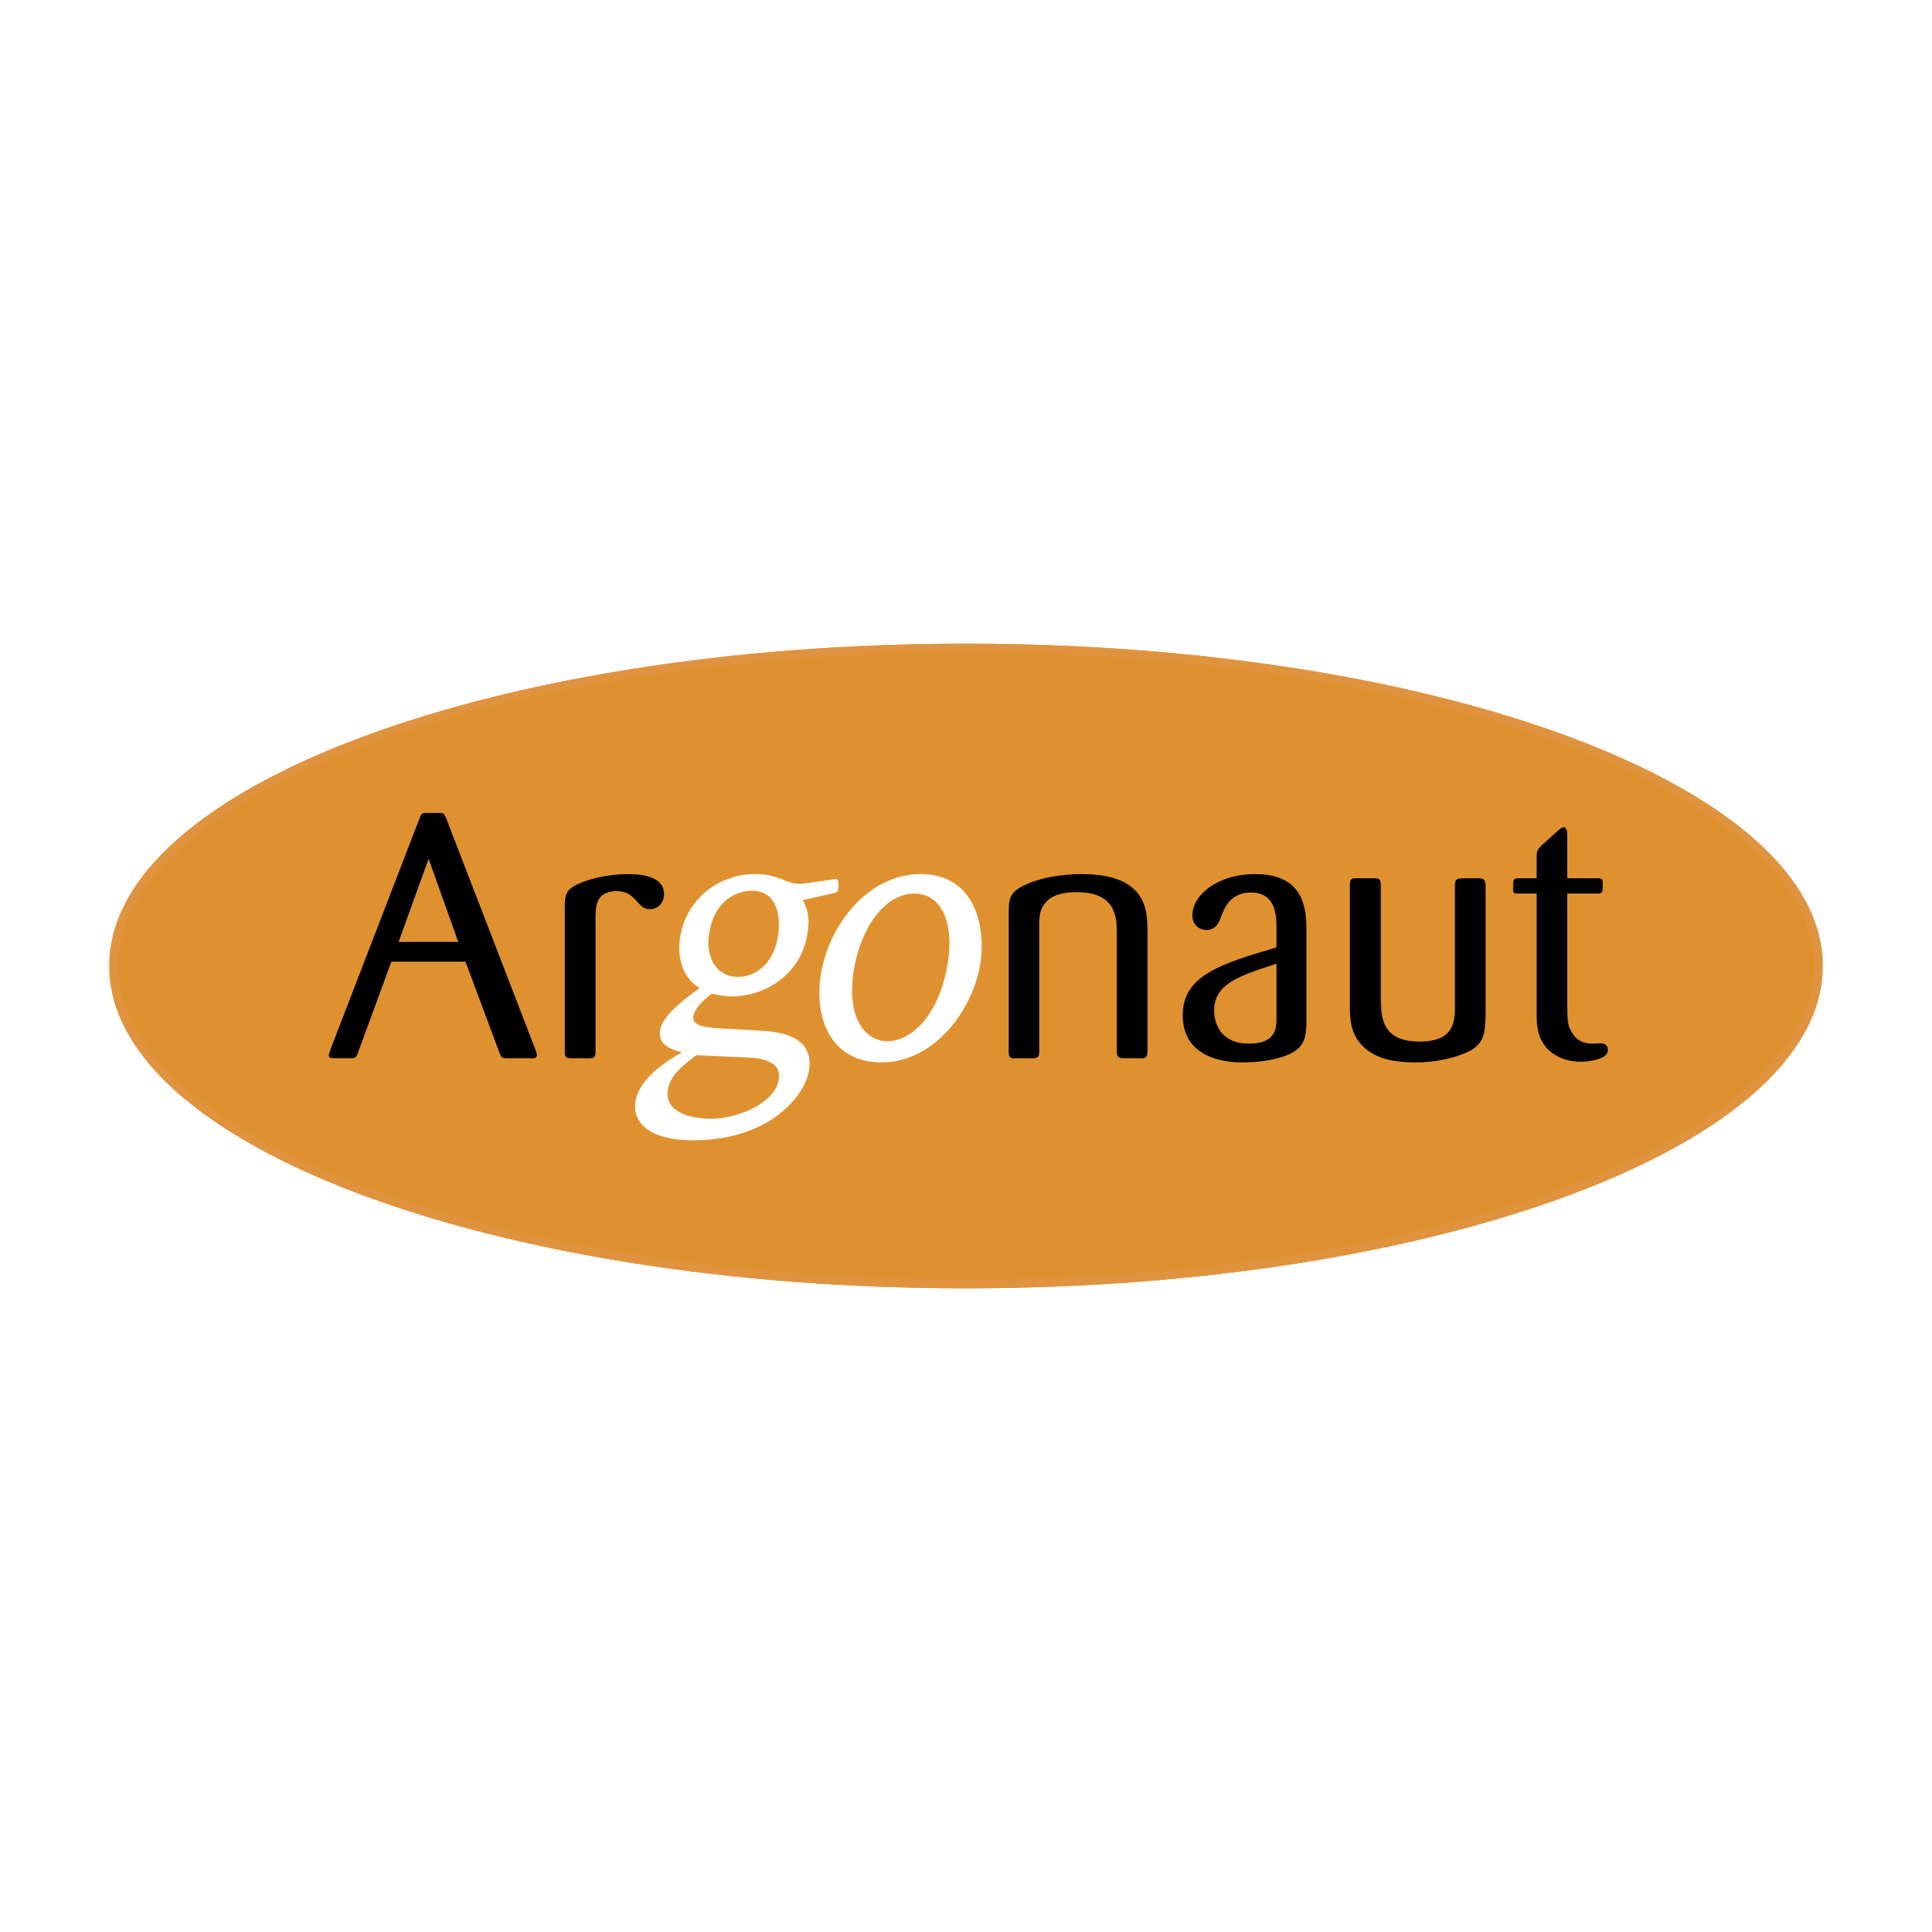 Argonaut Logo - Argonaut Logo PNG Transparent & SVG Vector - Freebie Supply